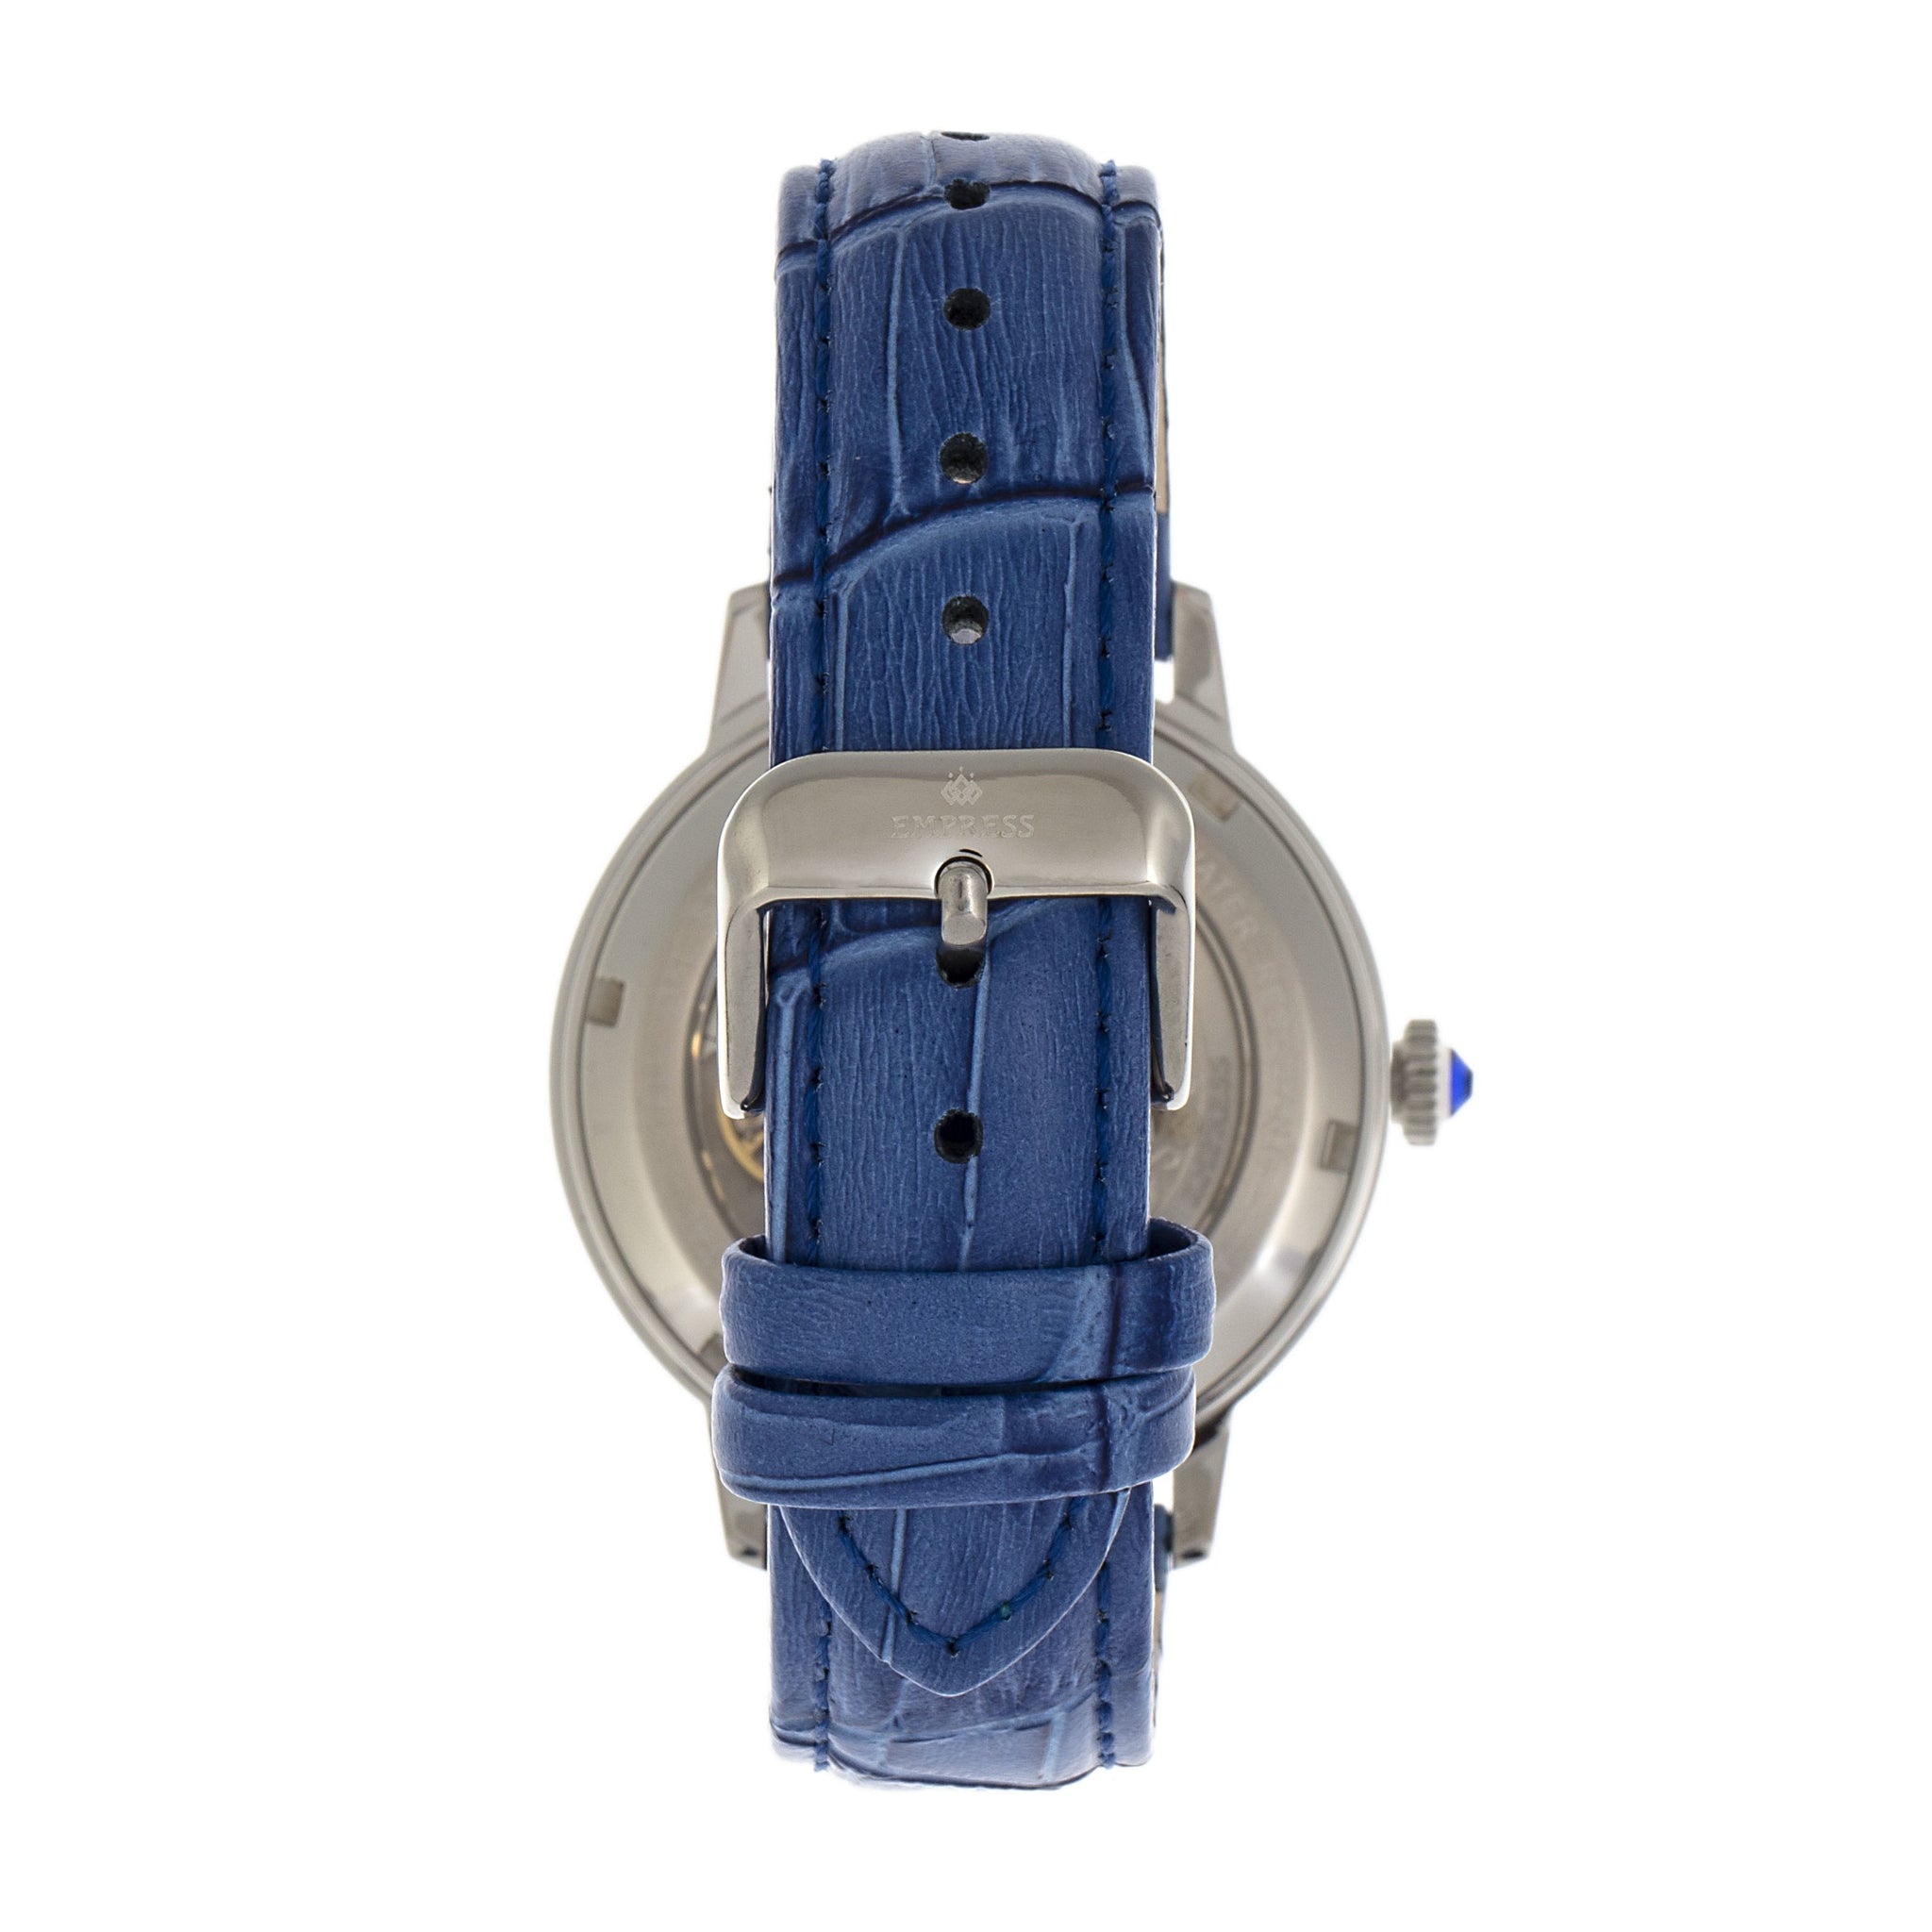 Empress Tatiana Automatic Semi-Skeleton Leather-Band Watch - Blue - EMPEM2902